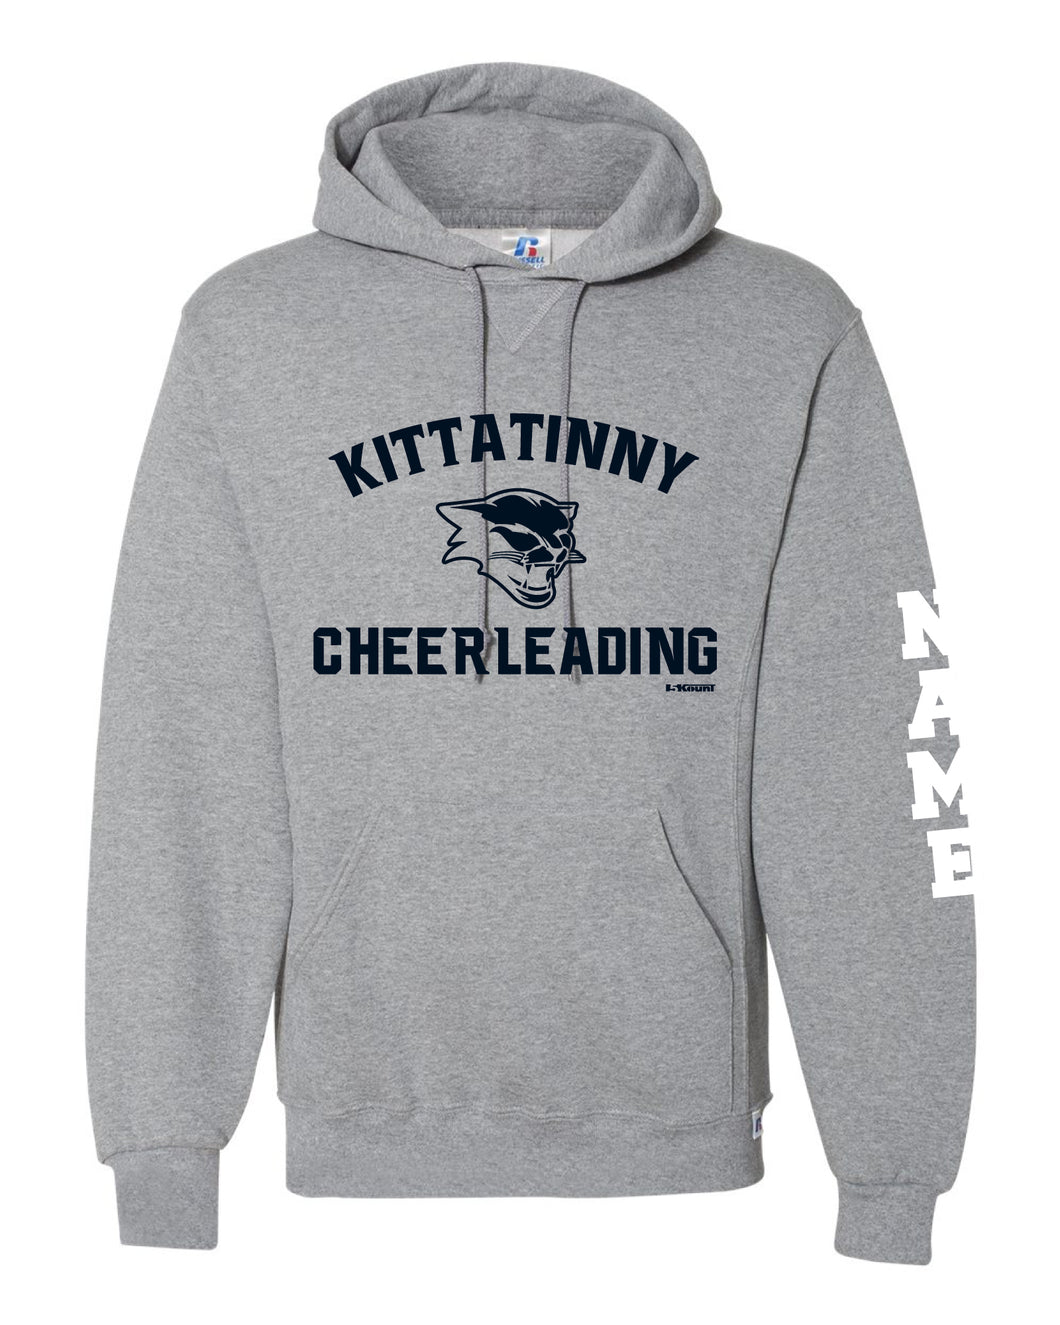 Kittatinny Cheer Russell Athletic Cotton Hoodie - Gray - 5KounT2018